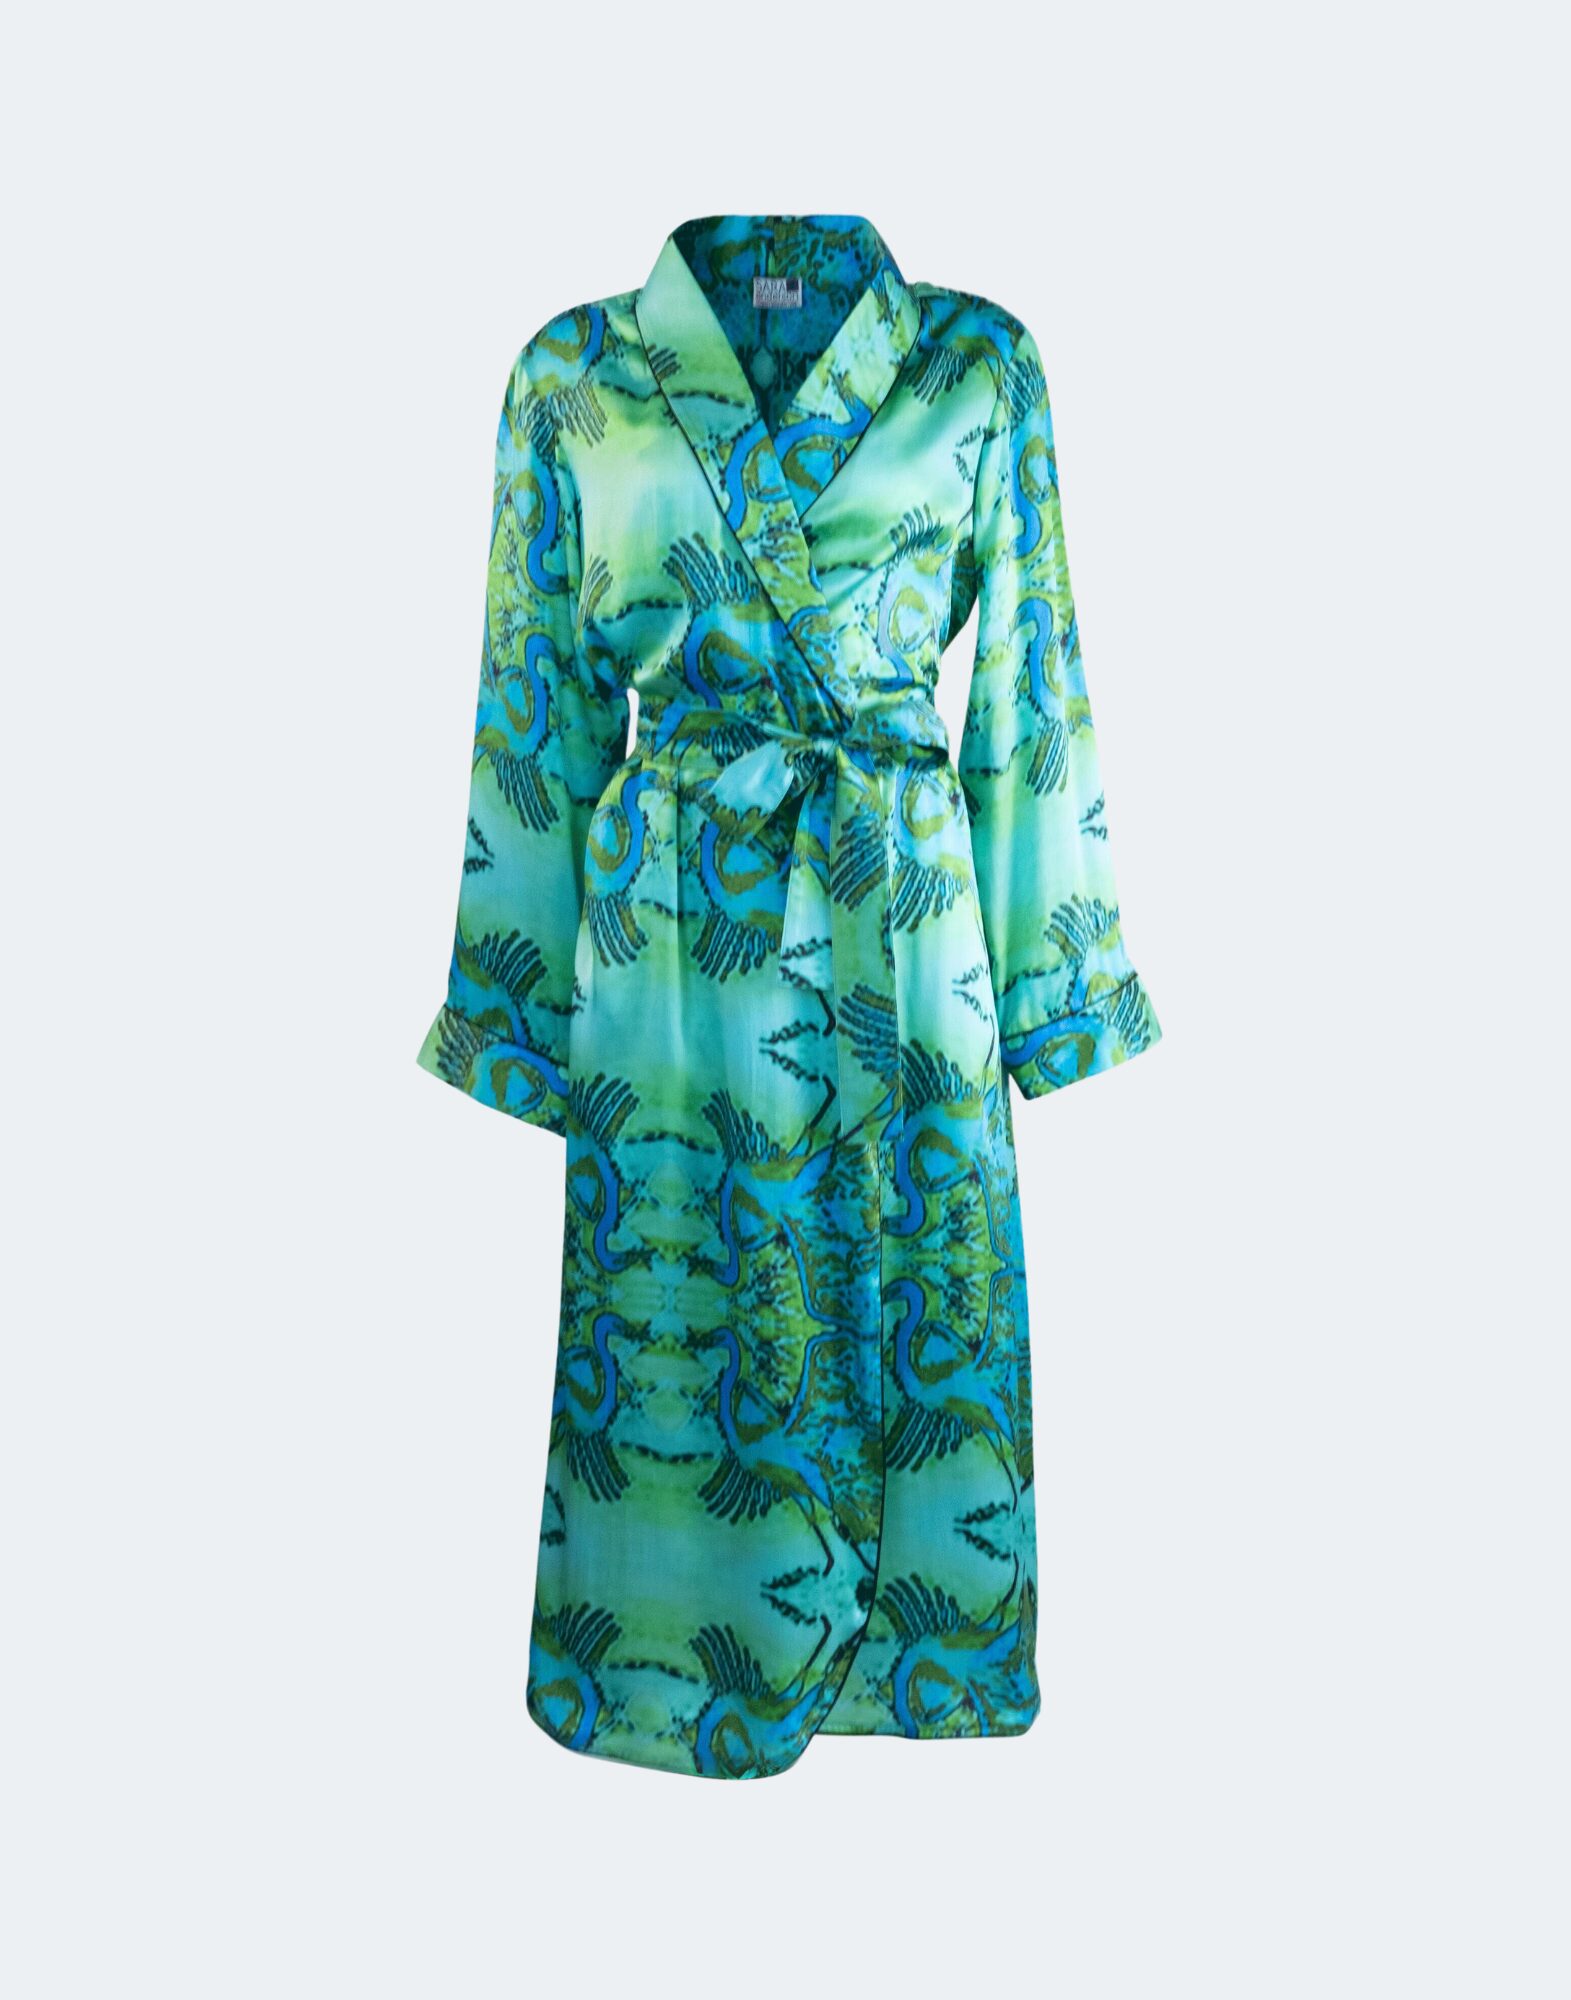 robe in blue/green print